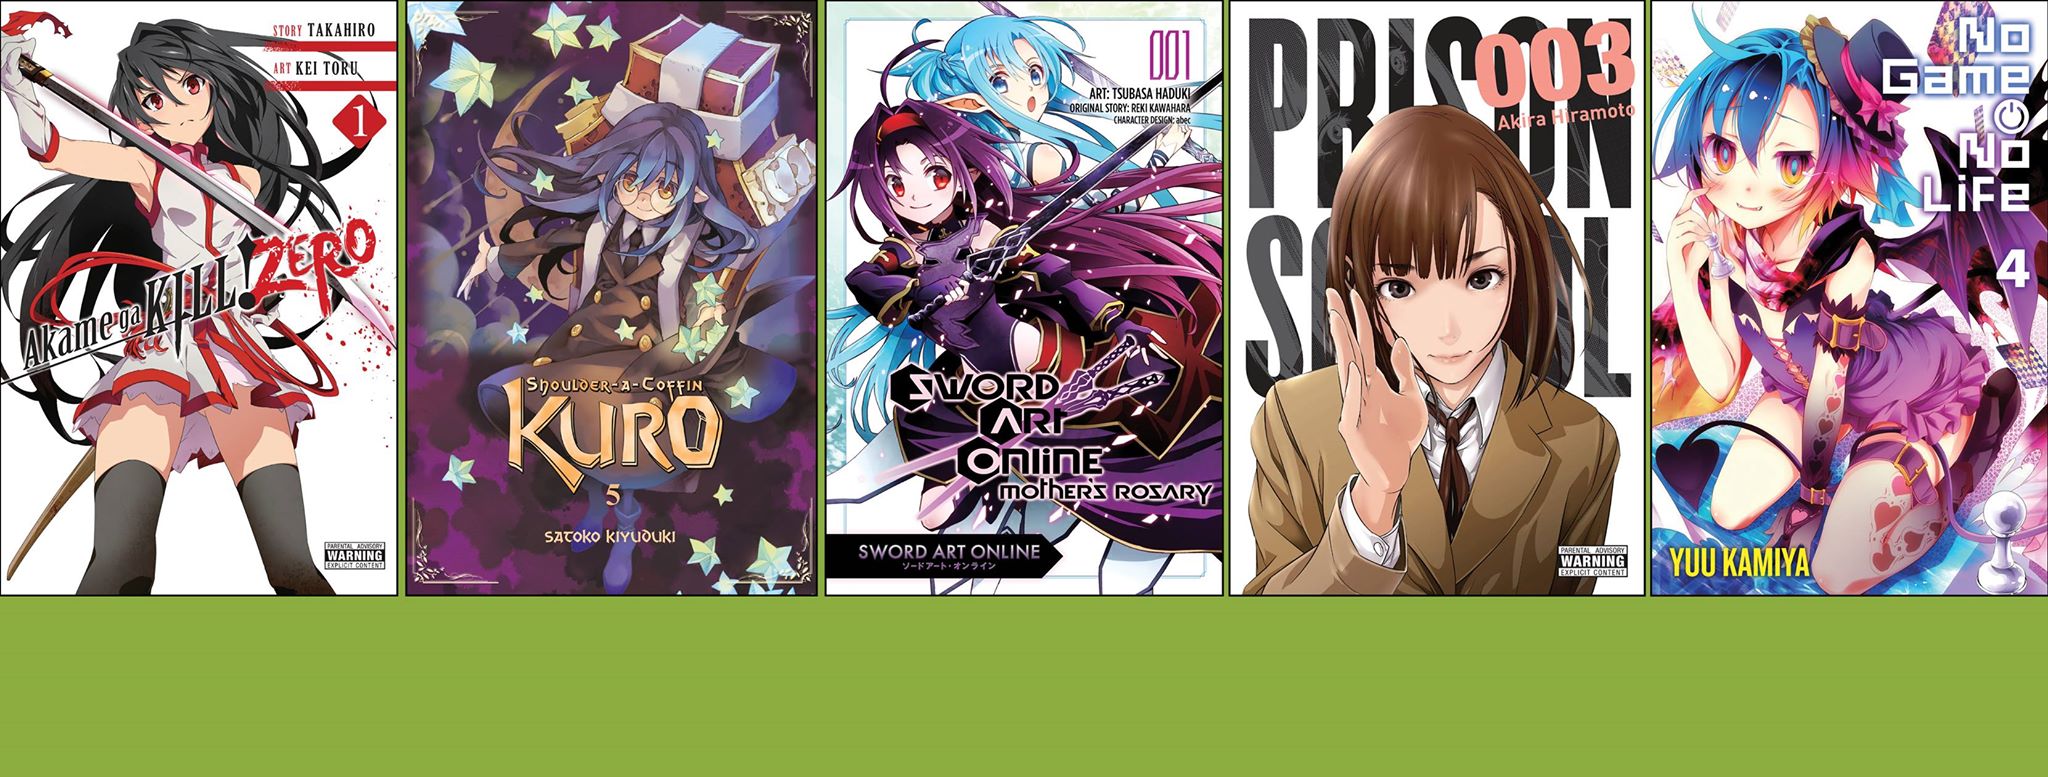 Some recent Yen Press titles